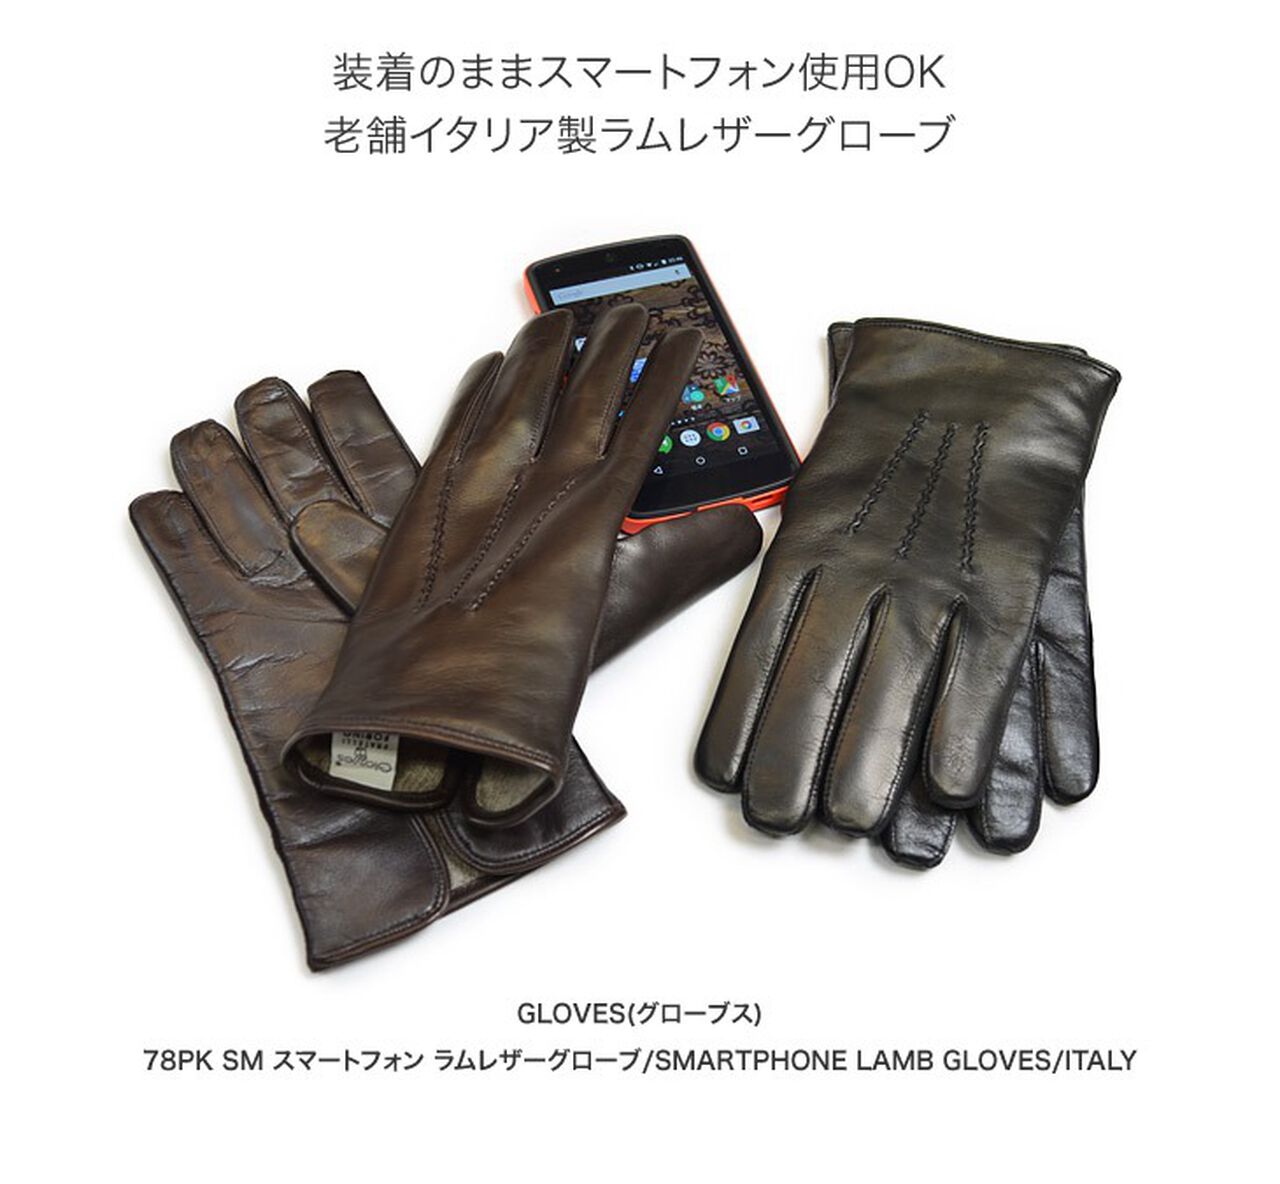 78PK-SM Smartphone Lamb Leather Gloves,, large image number 2